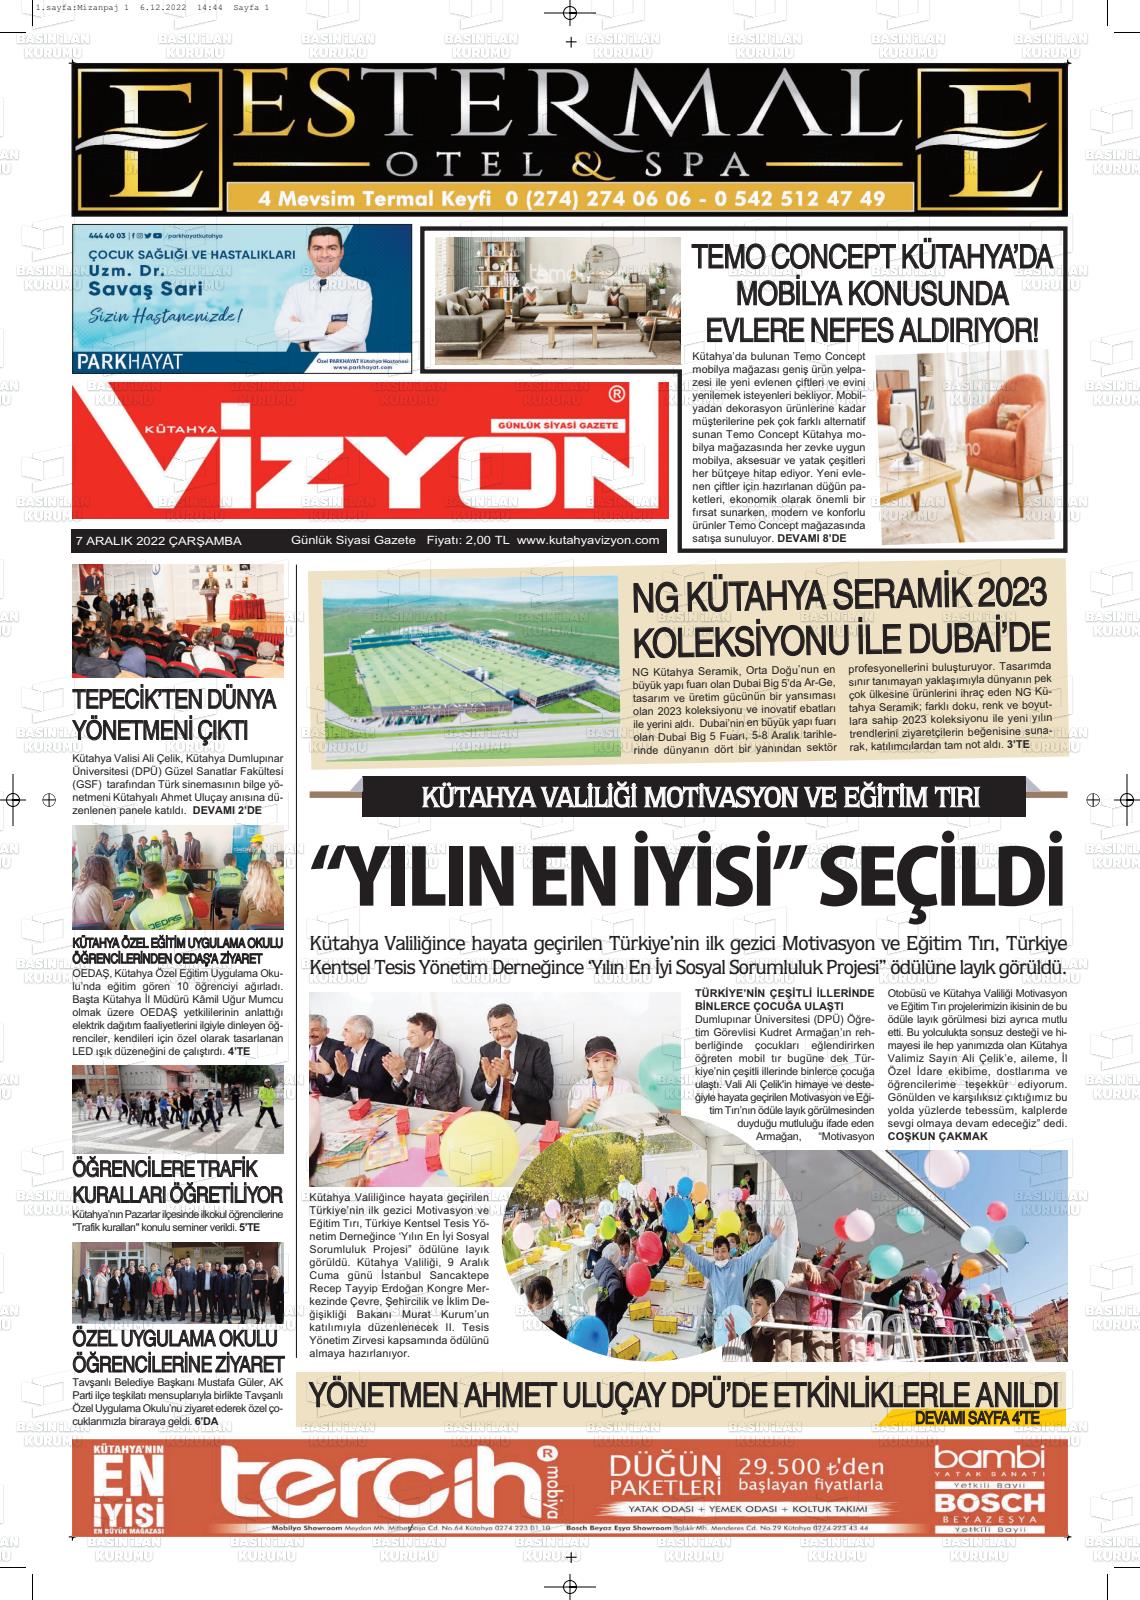 07 Aralık 2022 Kütahya Vizyon Gazete Manşeti